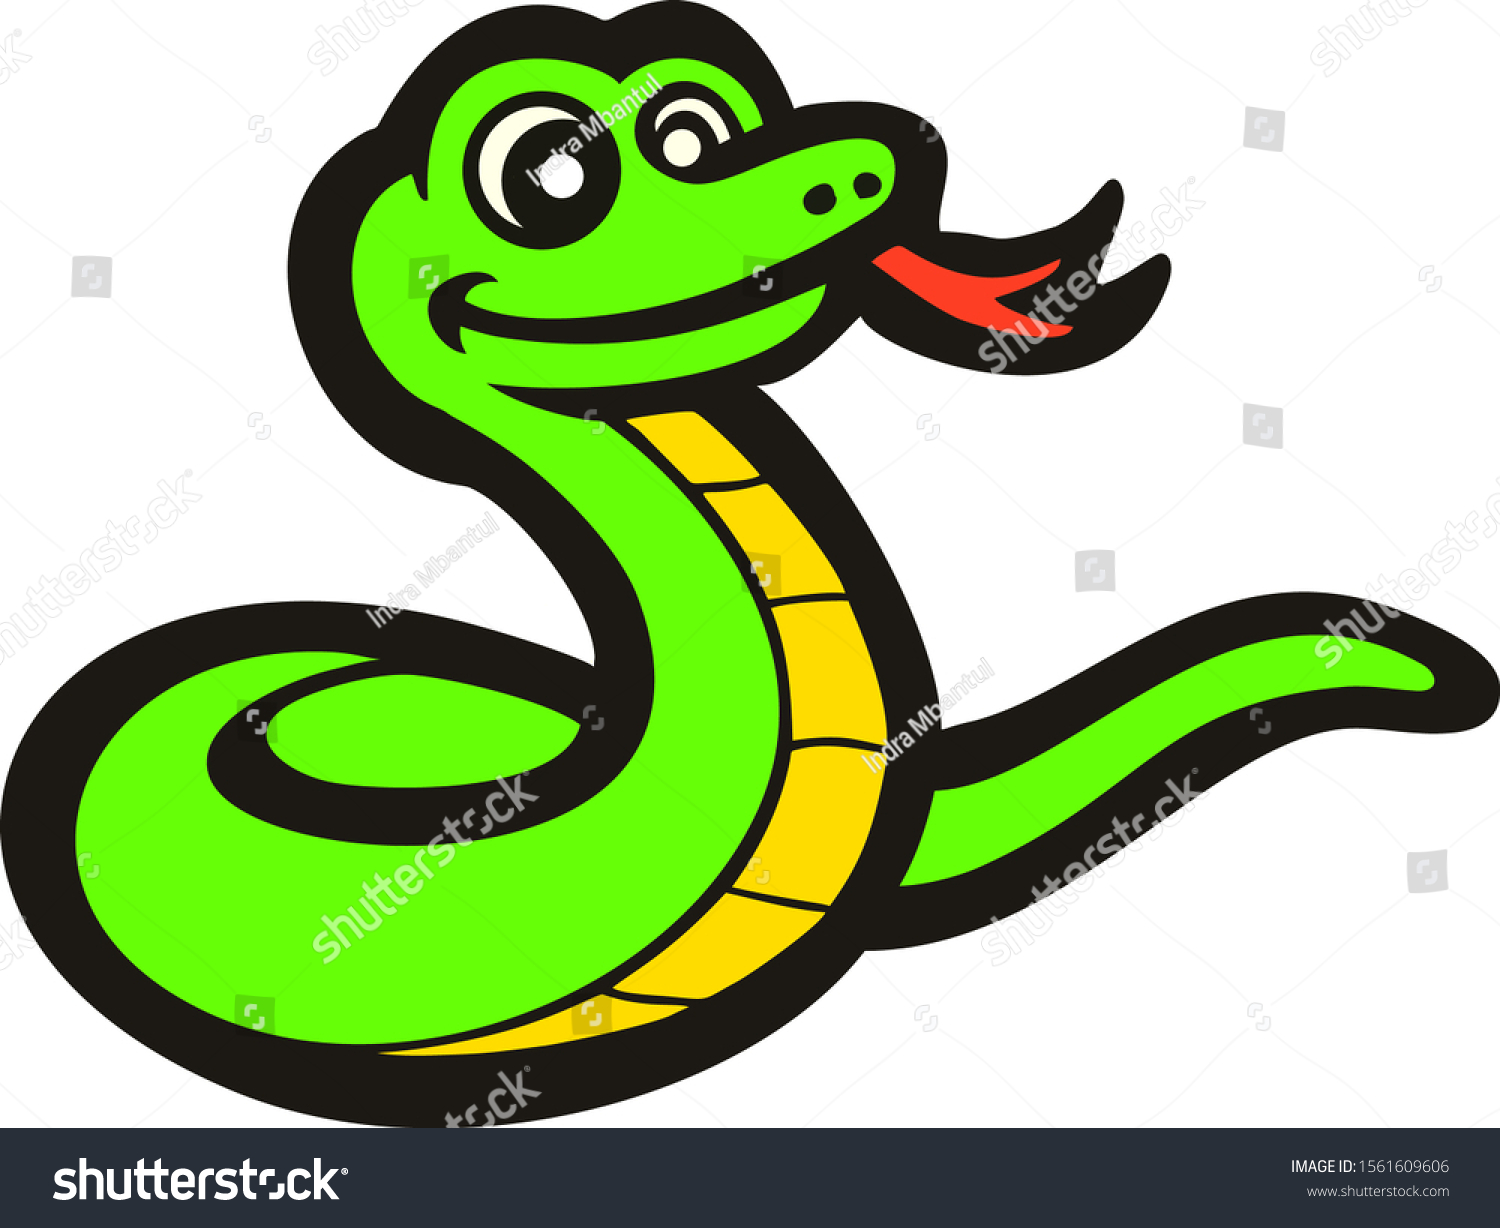 Cartoon Vector Image Cute Green Snake Vector có sẵn miễn phí bản quyền Shutterstock